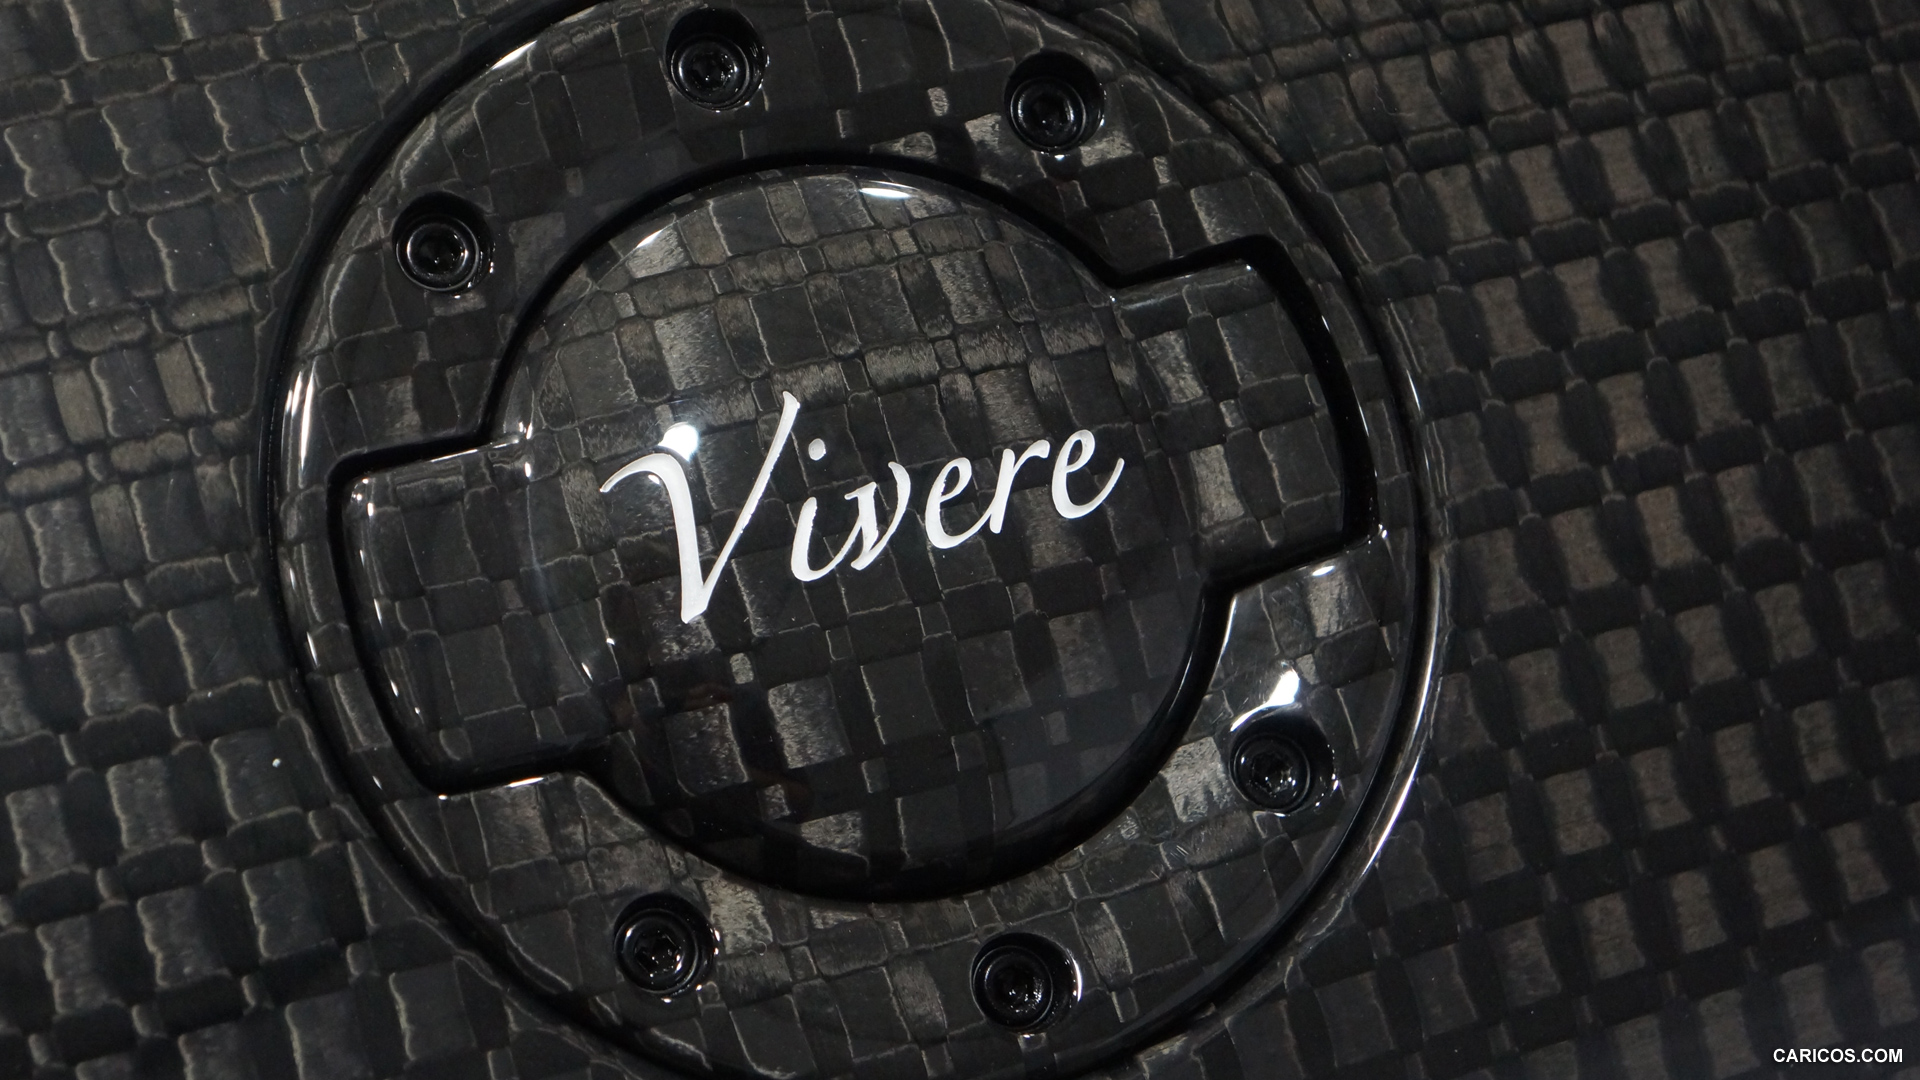 2014 Mansory Vivere based on Bugatti Veyron 16.4  - Detail, #7 of 8